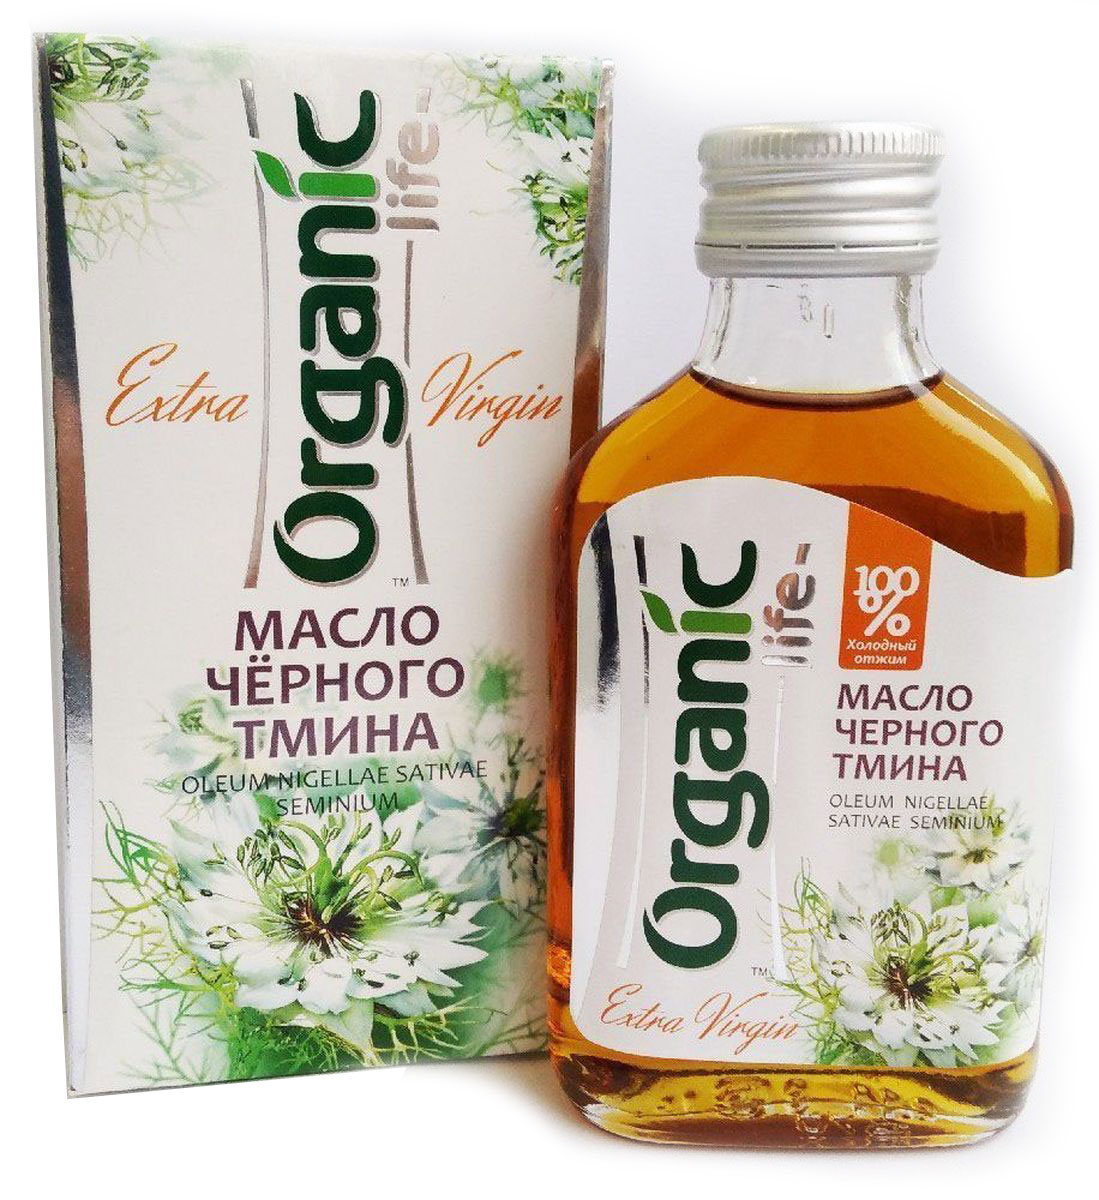 Organic Life масло черного тмина, 100 мл